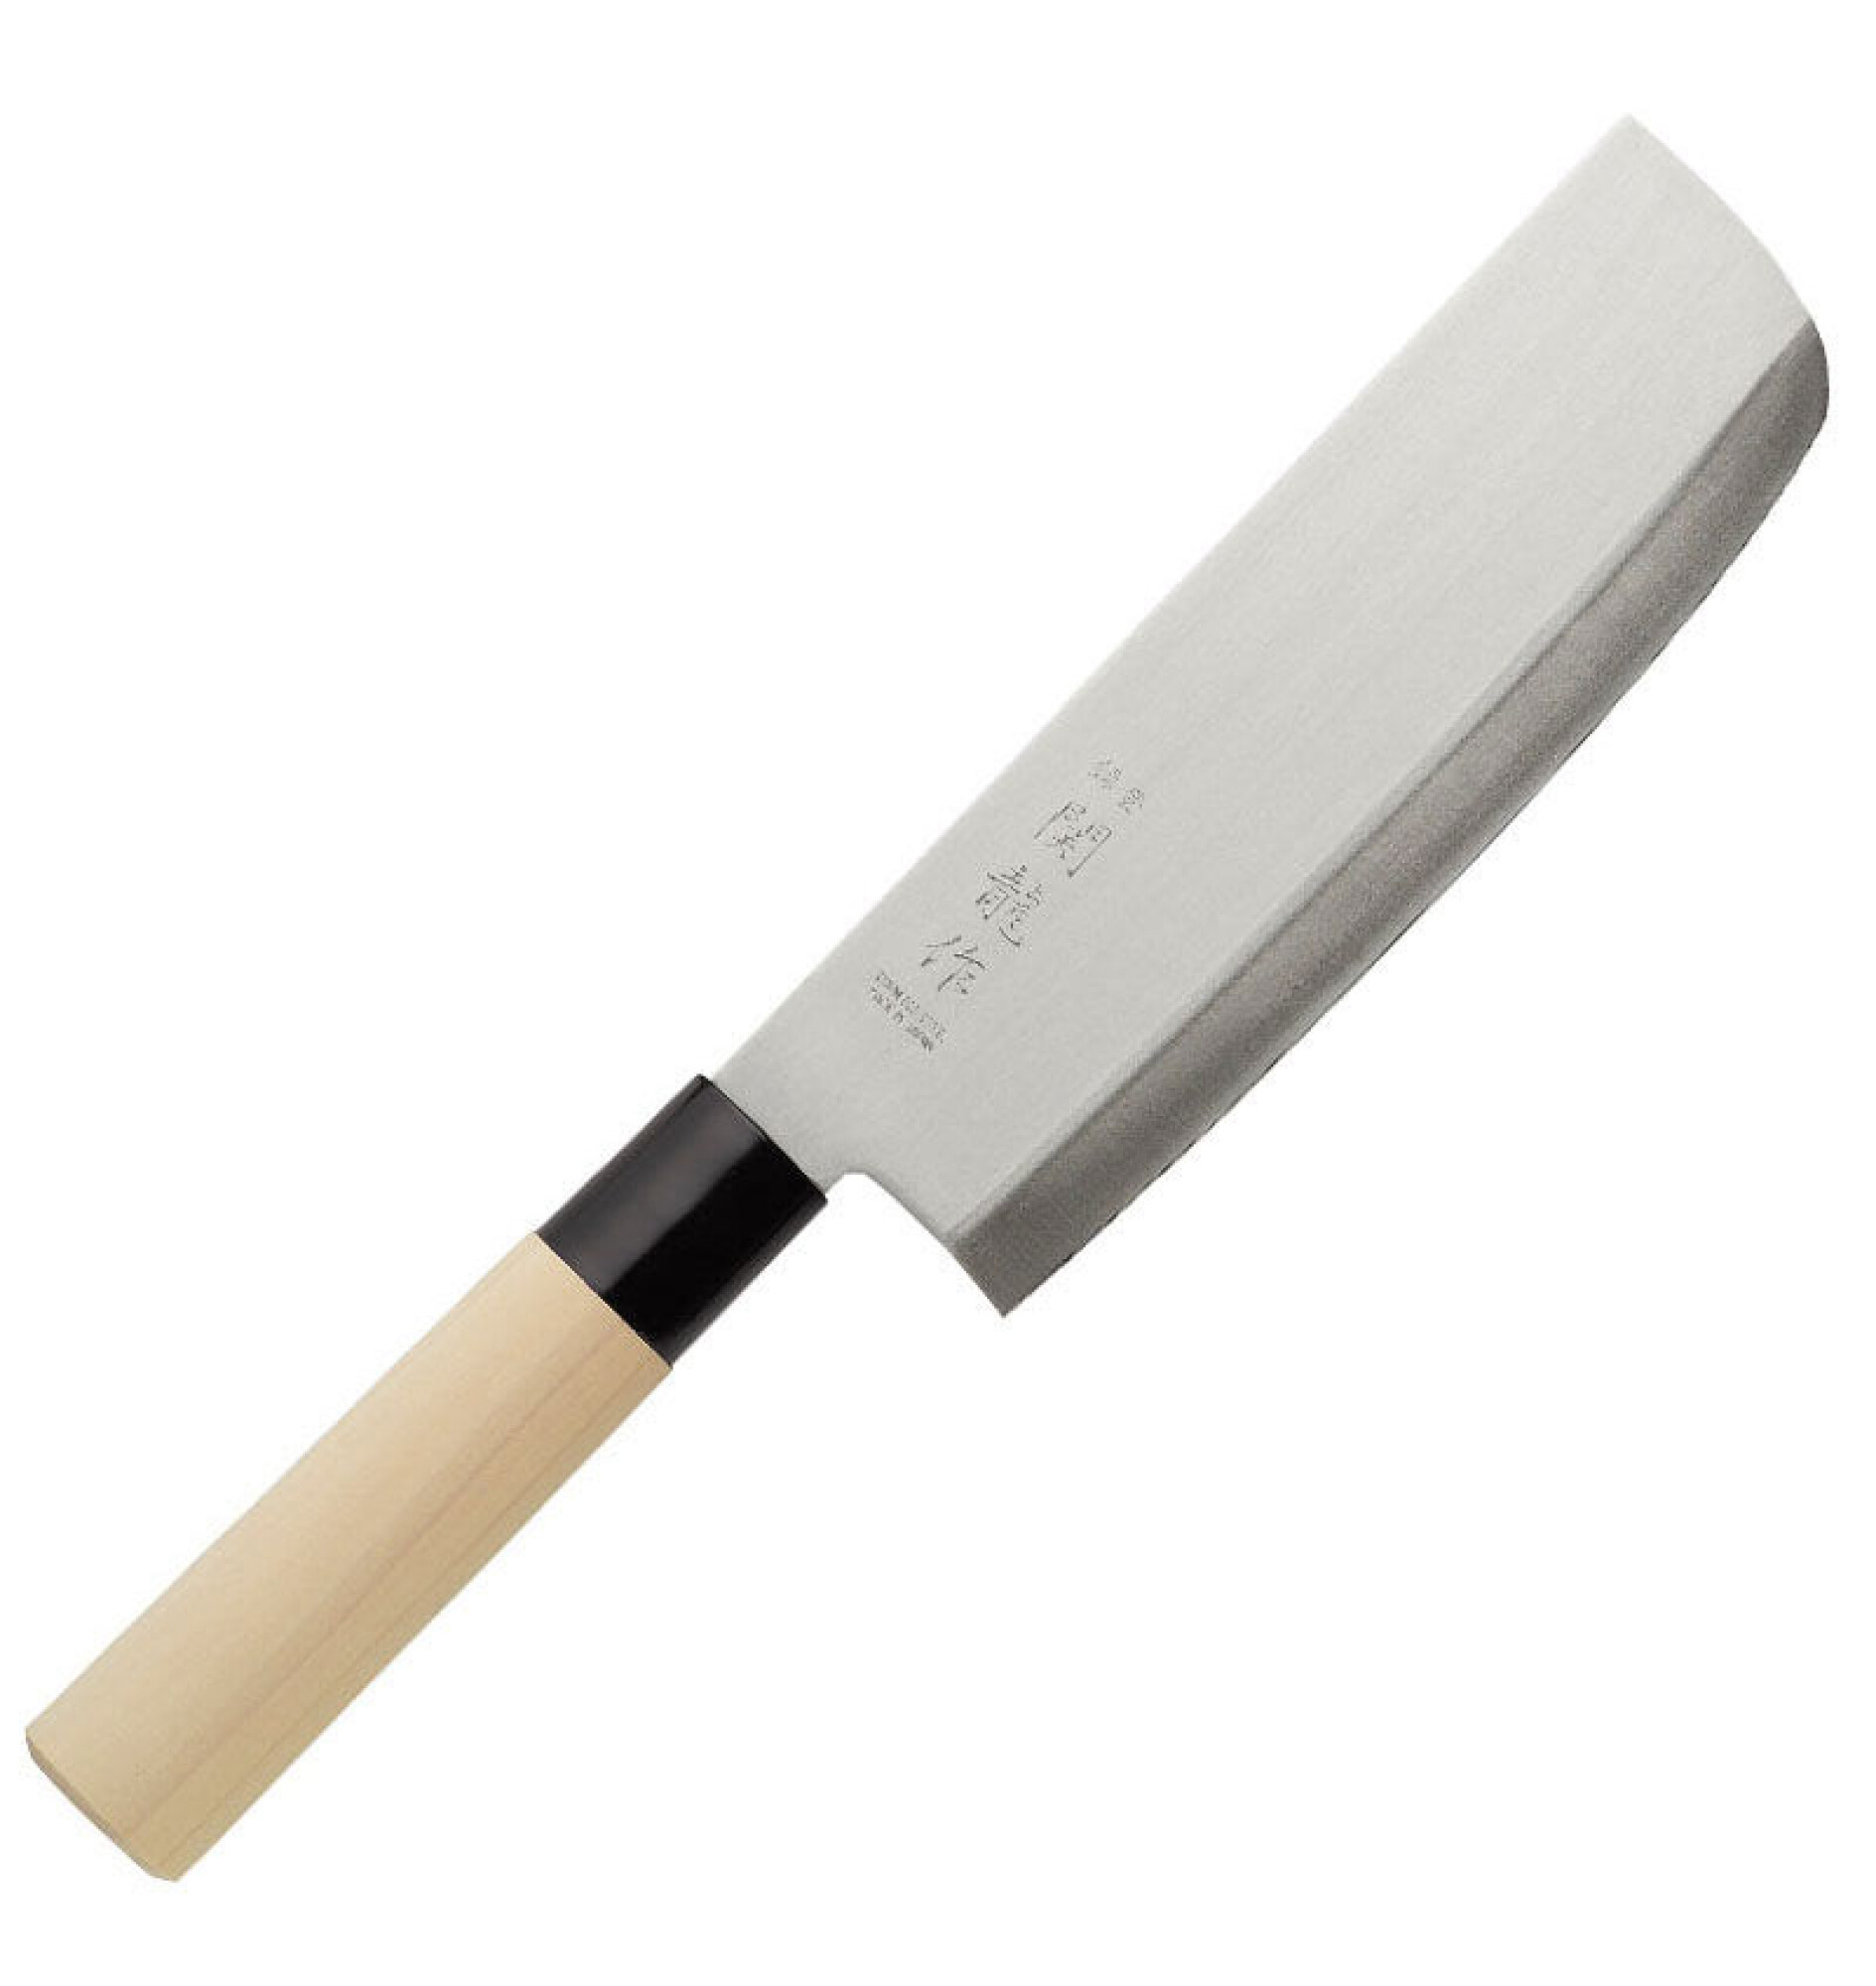 https://f.fcdn.app/imgs/ae6e39/www.basan.com.uy/basauy/f178/original/catalogo/SR200_SR200_1/2000-2000/cuchillo-cocina-nakiri-165mm-sekiryu-cuchillo-cocina-nakiri-165mm-sekiryu.jpg